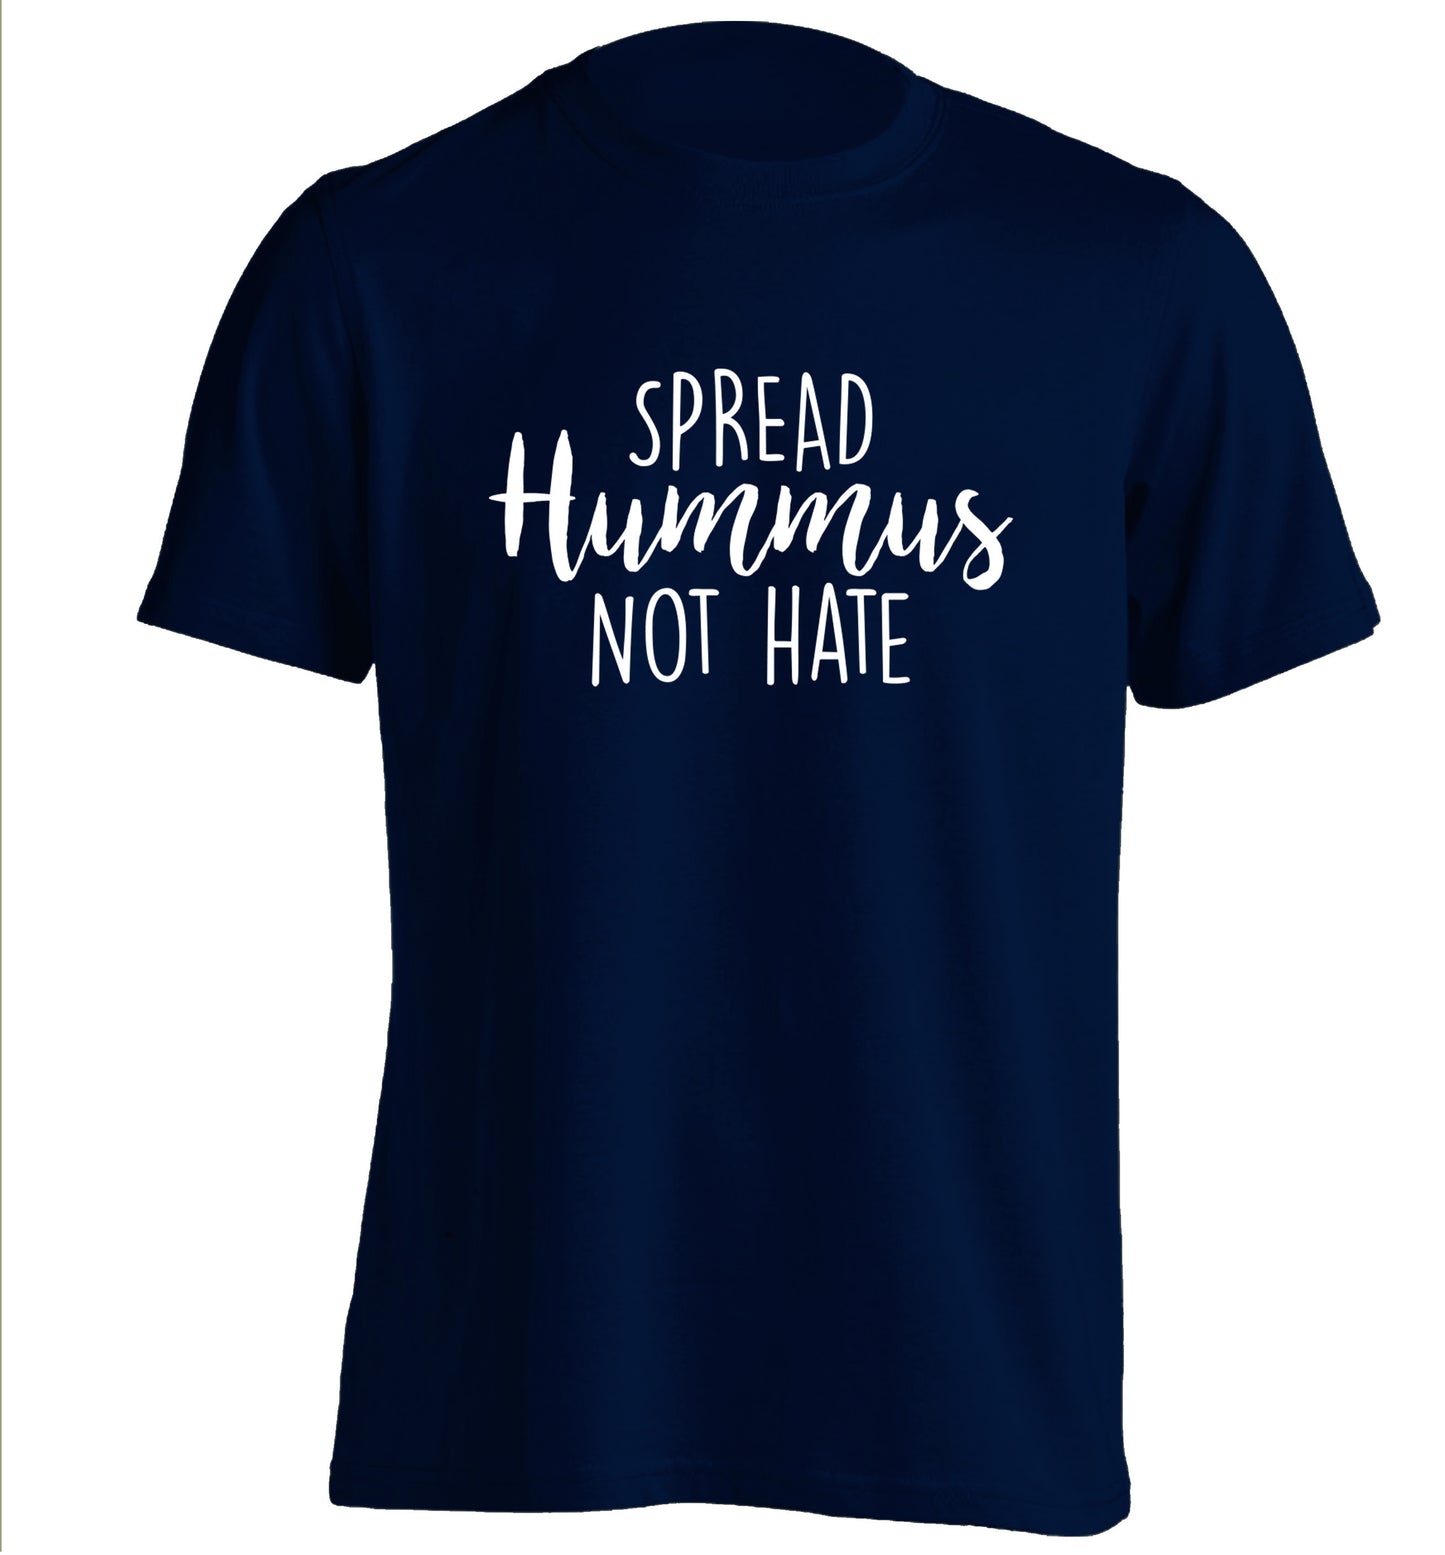 Spread hummus not hate script text adults unisex navy Tshirt 2XL